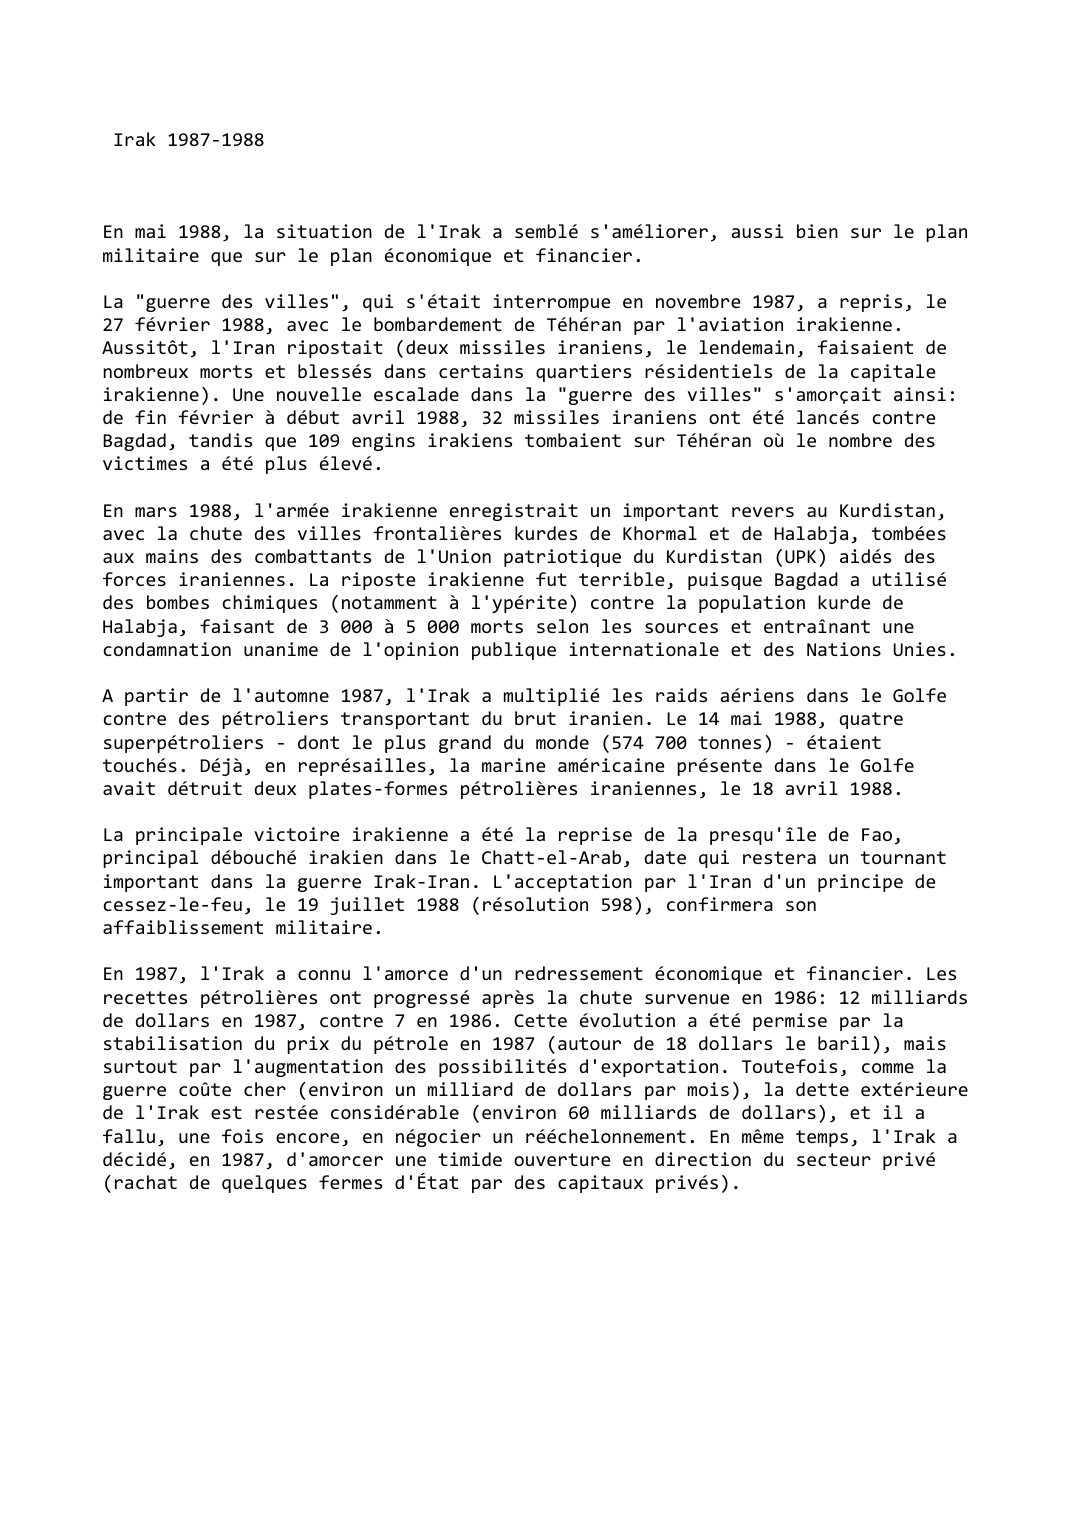 Prévisualisation du document Irak (1987-1988)